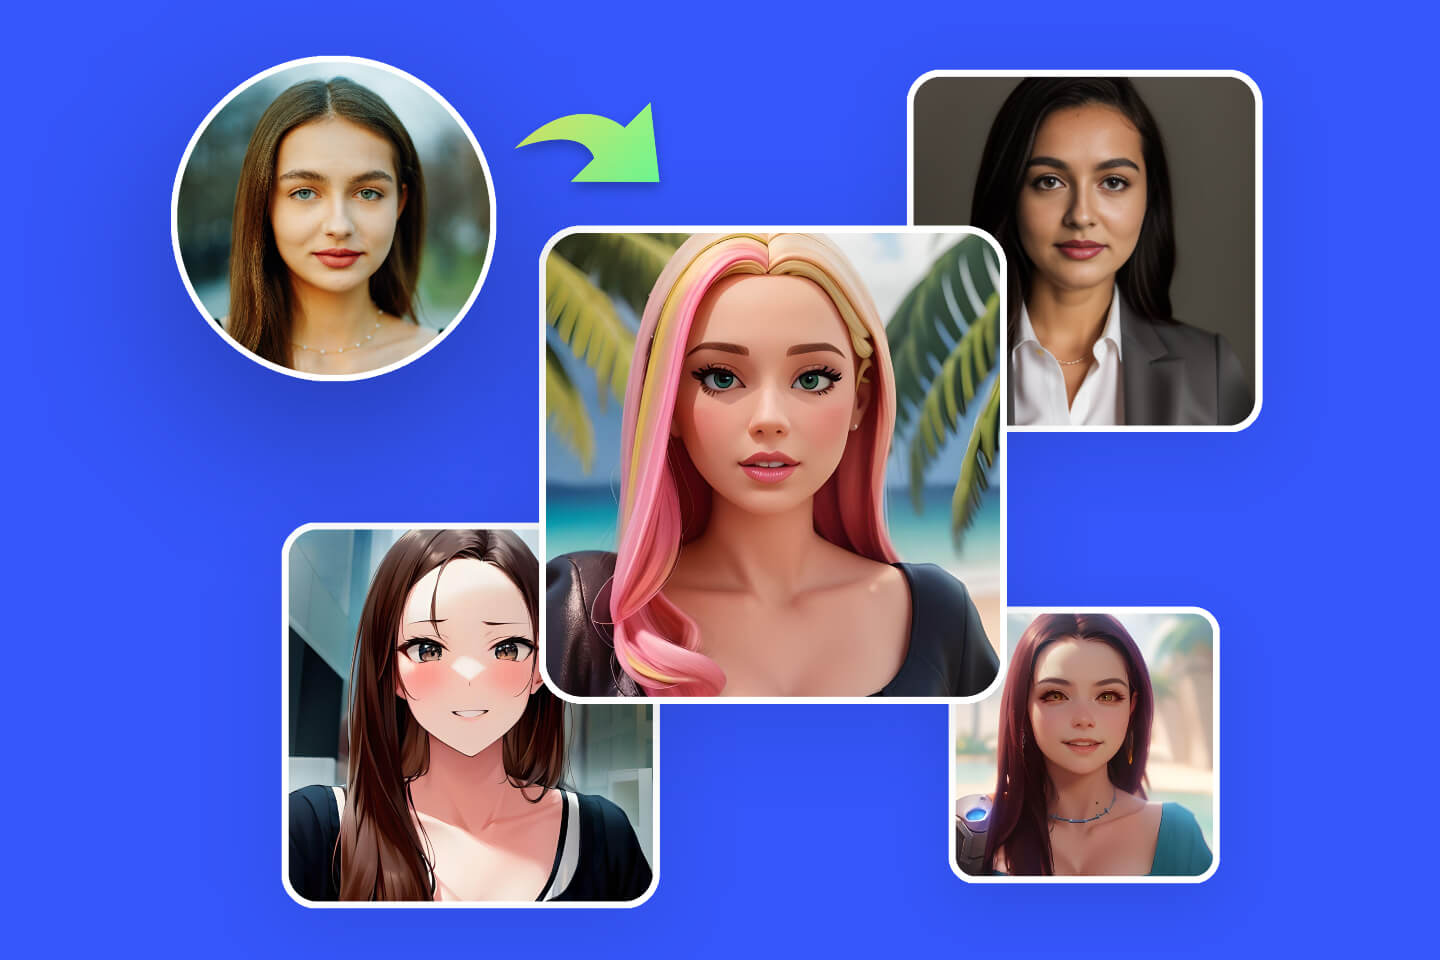 Barbie meme generator: How to make your own Barbie selfie poster - PopBuzz